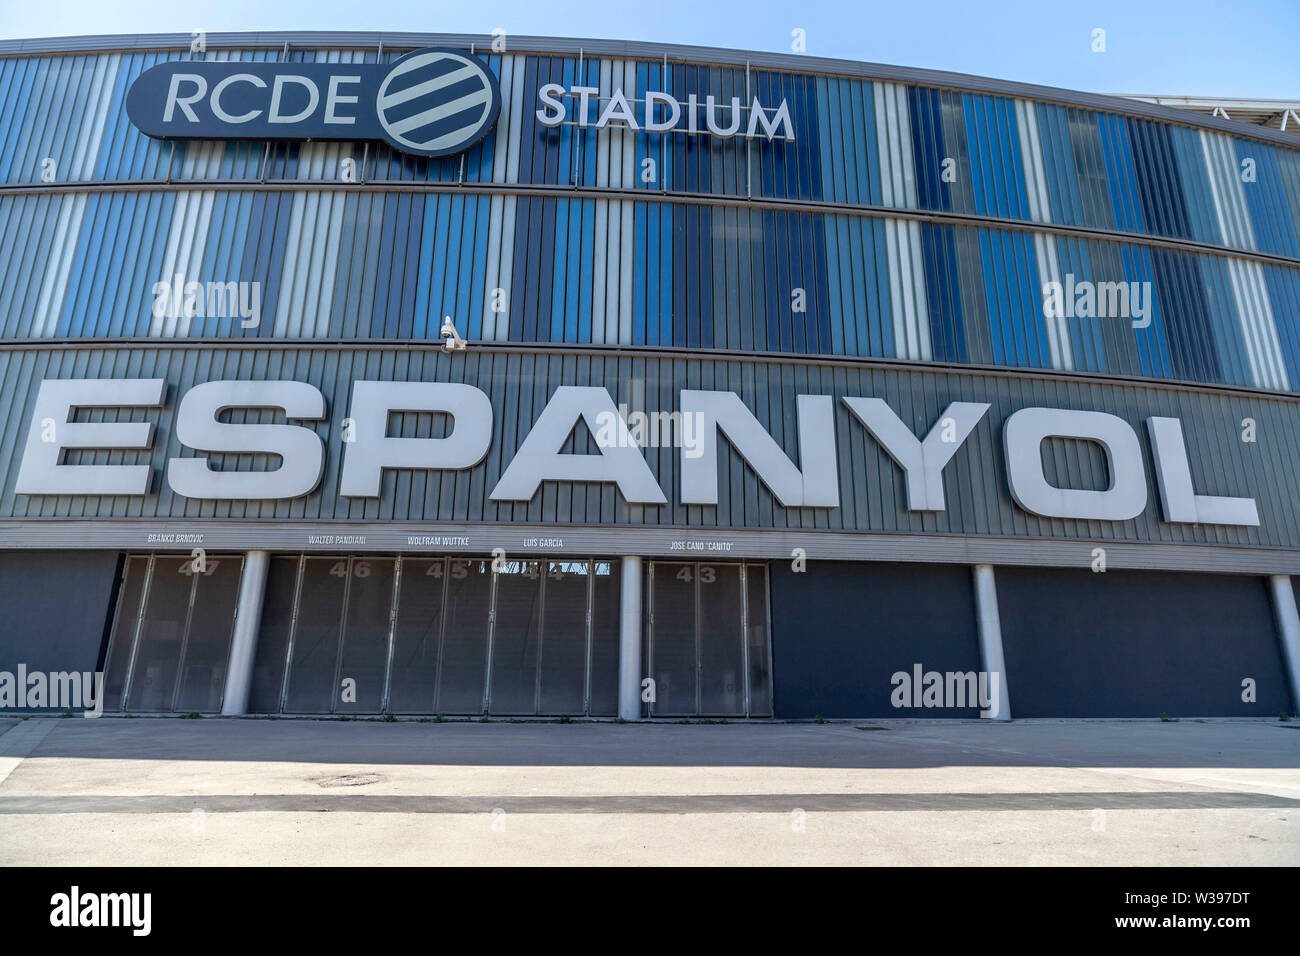 Cornella de Llobregat, Spanien das Fußballstadion RCDE Stadium, Team RCDE Espanyol. Stockfoto